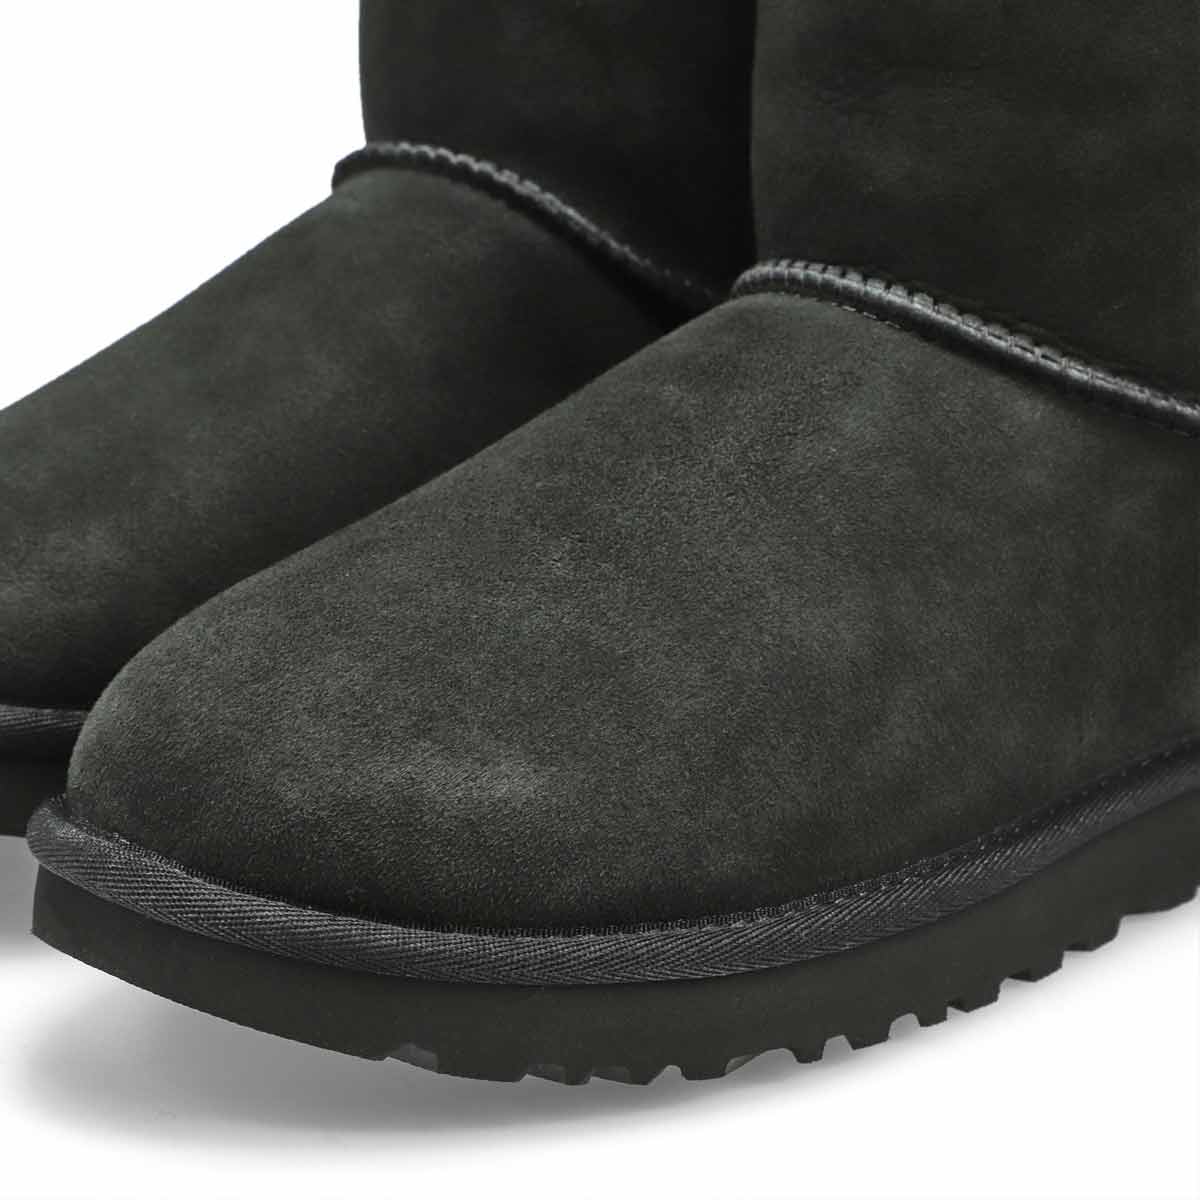 Women's CLASSIC SHORT II black sheepskin boots